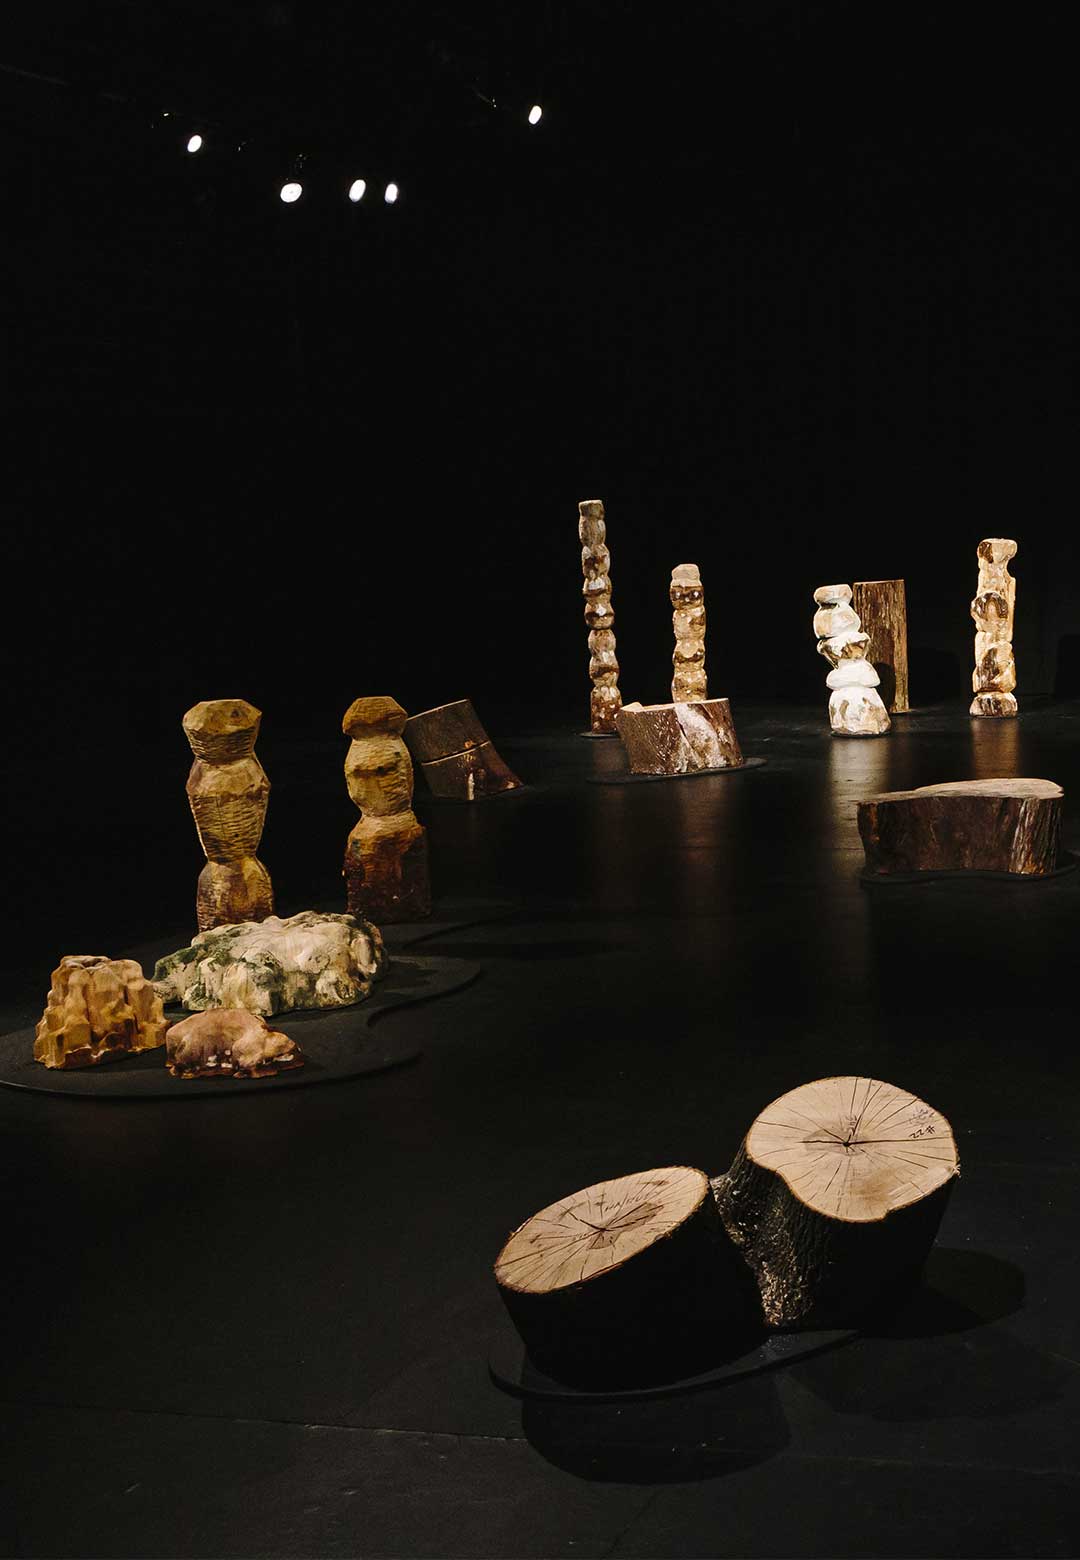 Andrea Shin Ling presents a visceral art installation at the Rhubarb Arts Festival